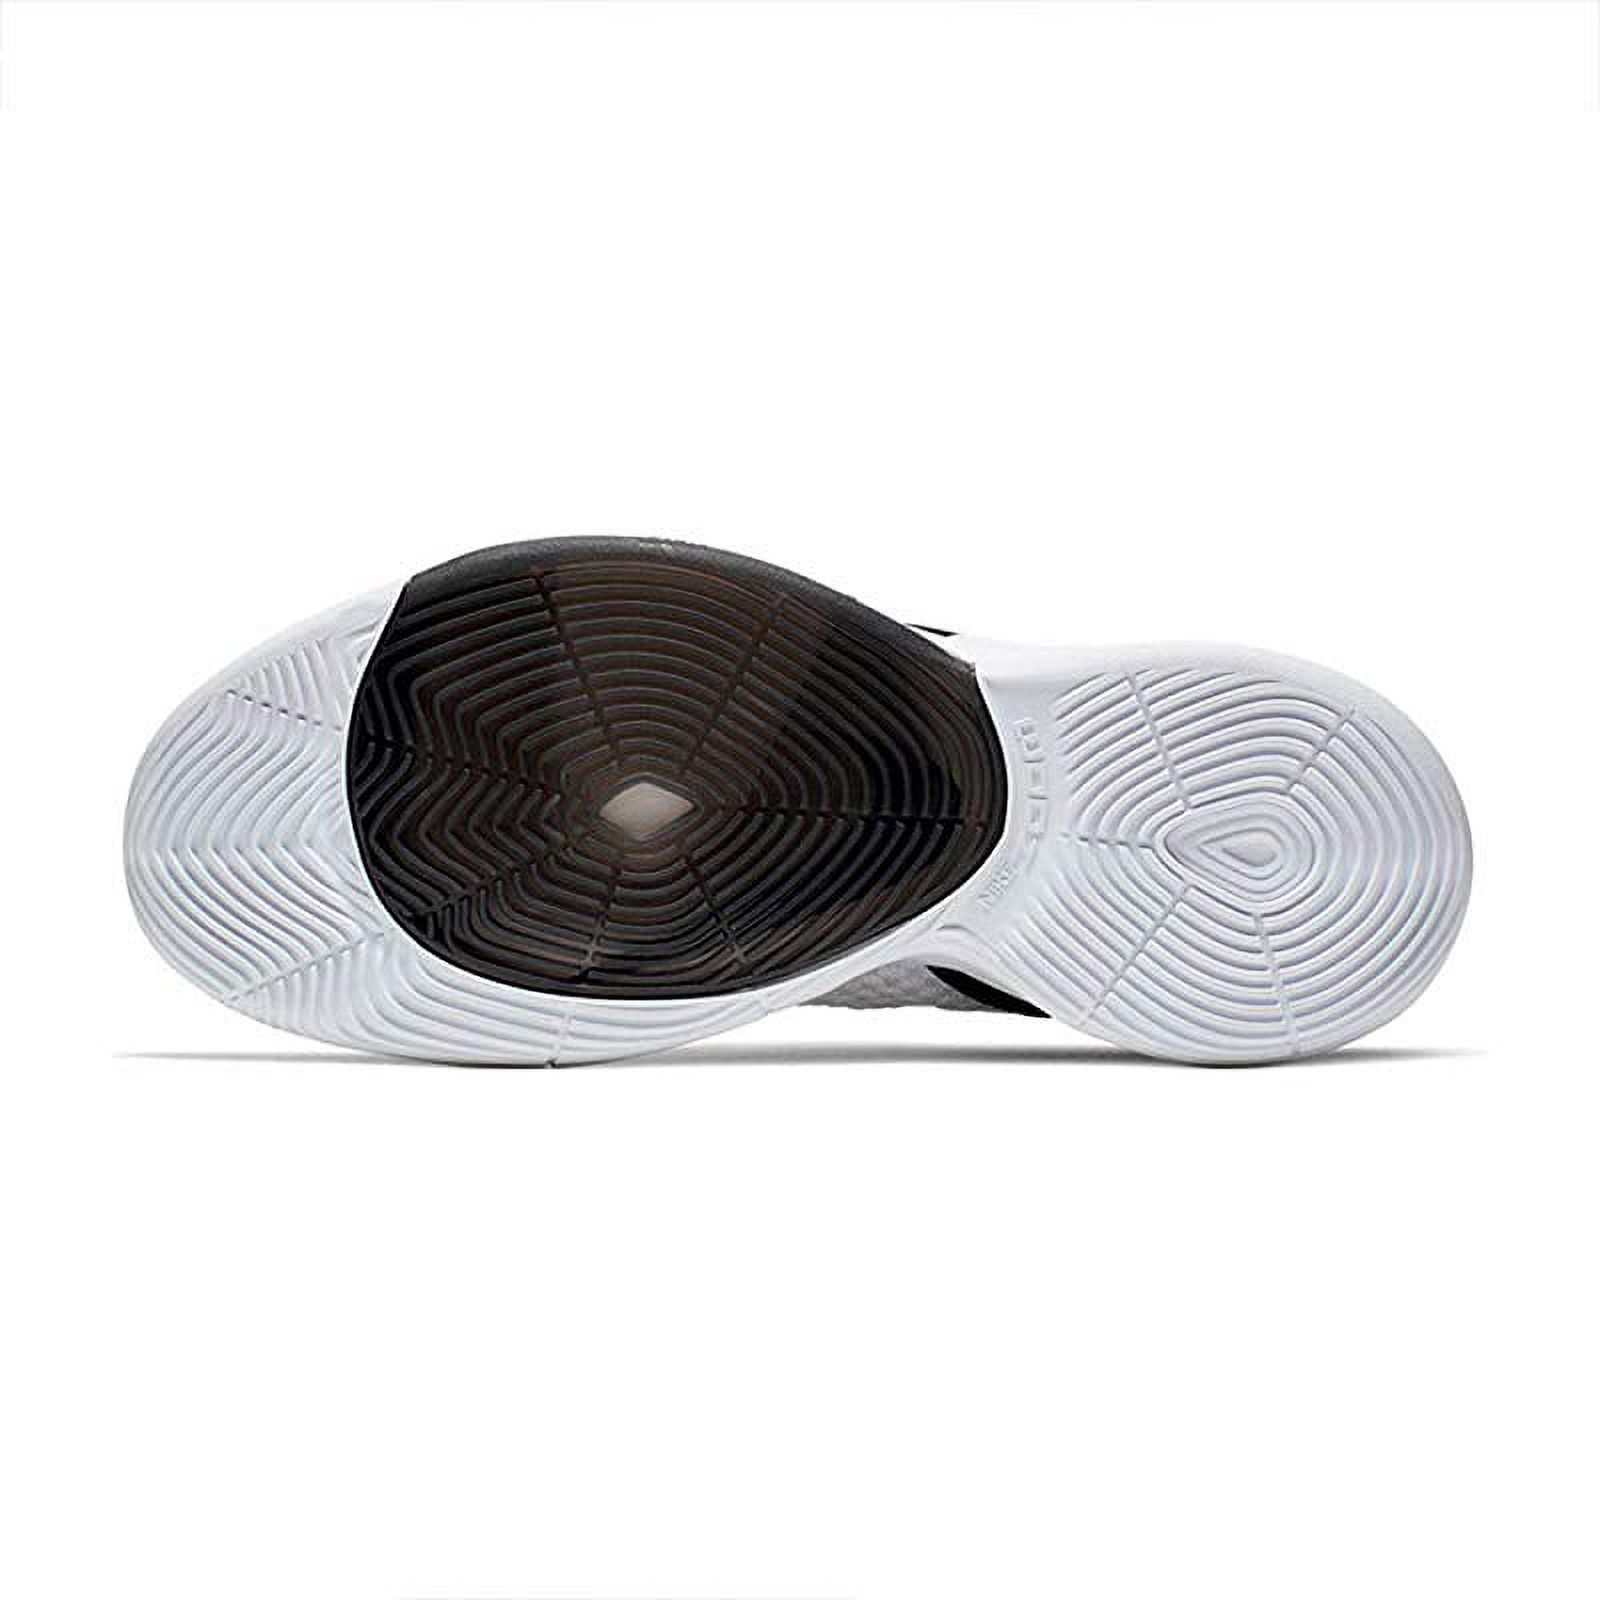 Nike Men's Zoom Rize TB Basketball Shoe, White/Black, 12.5 D(M) US - image 4 of 4